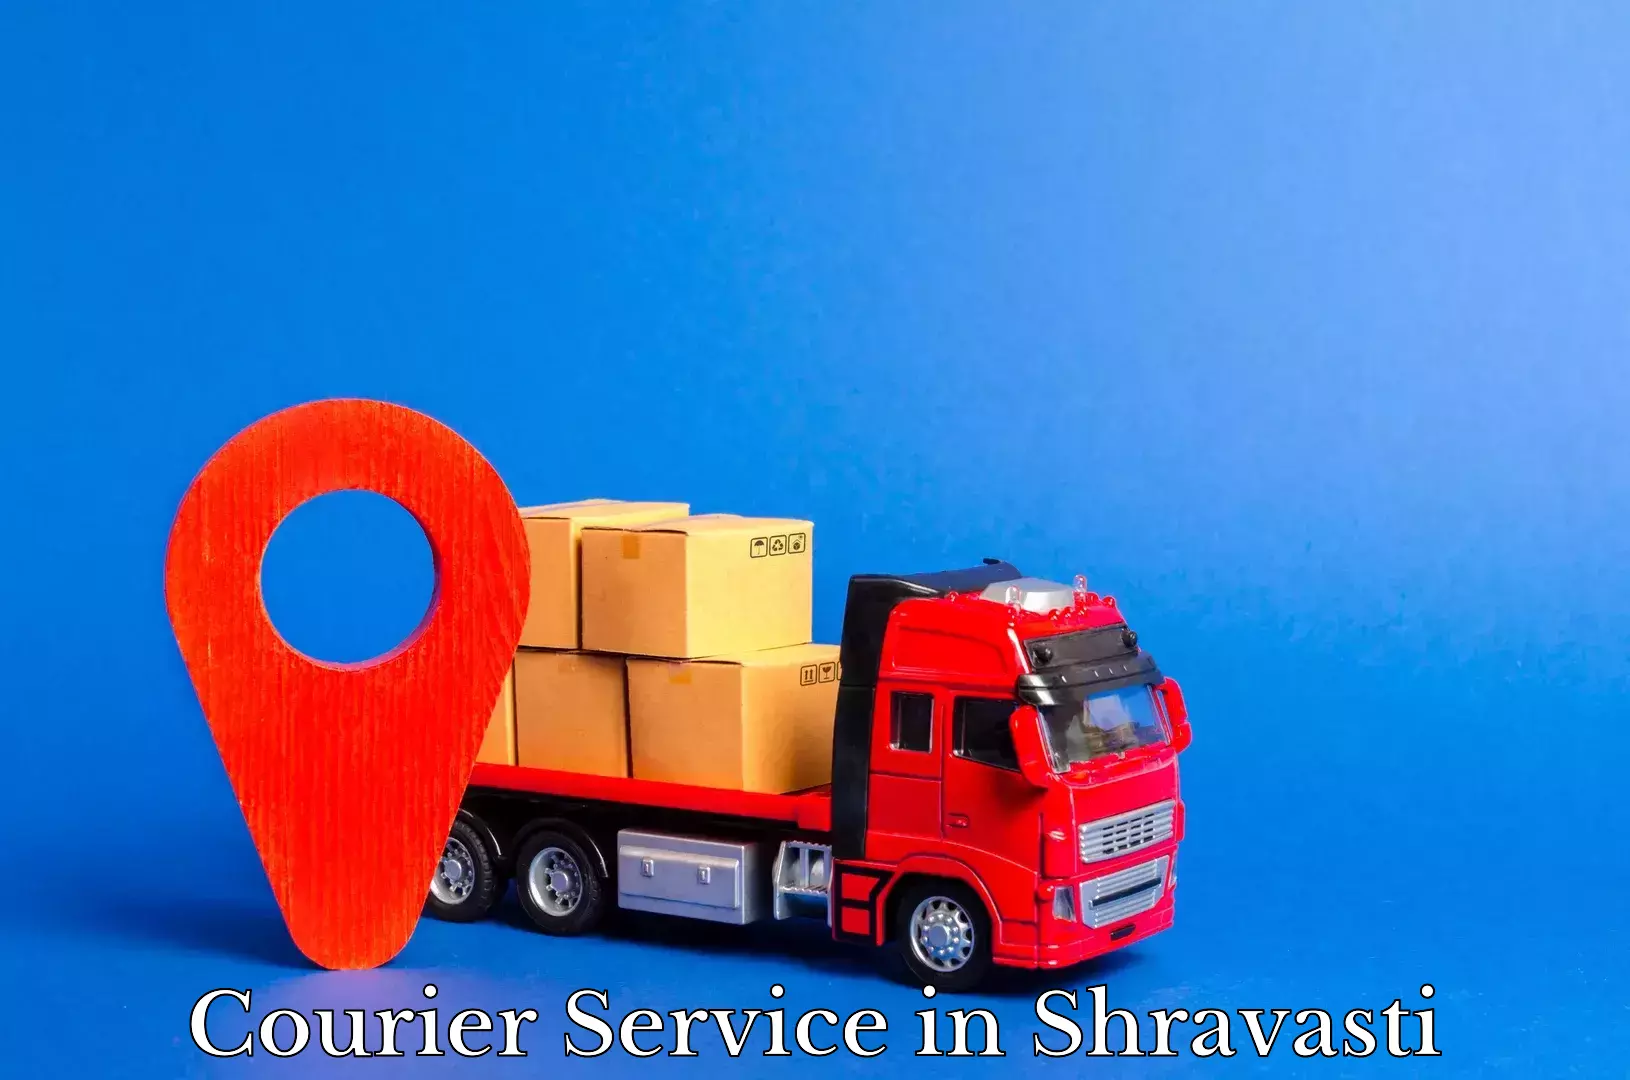 Efficient shipping operations in Shravasti